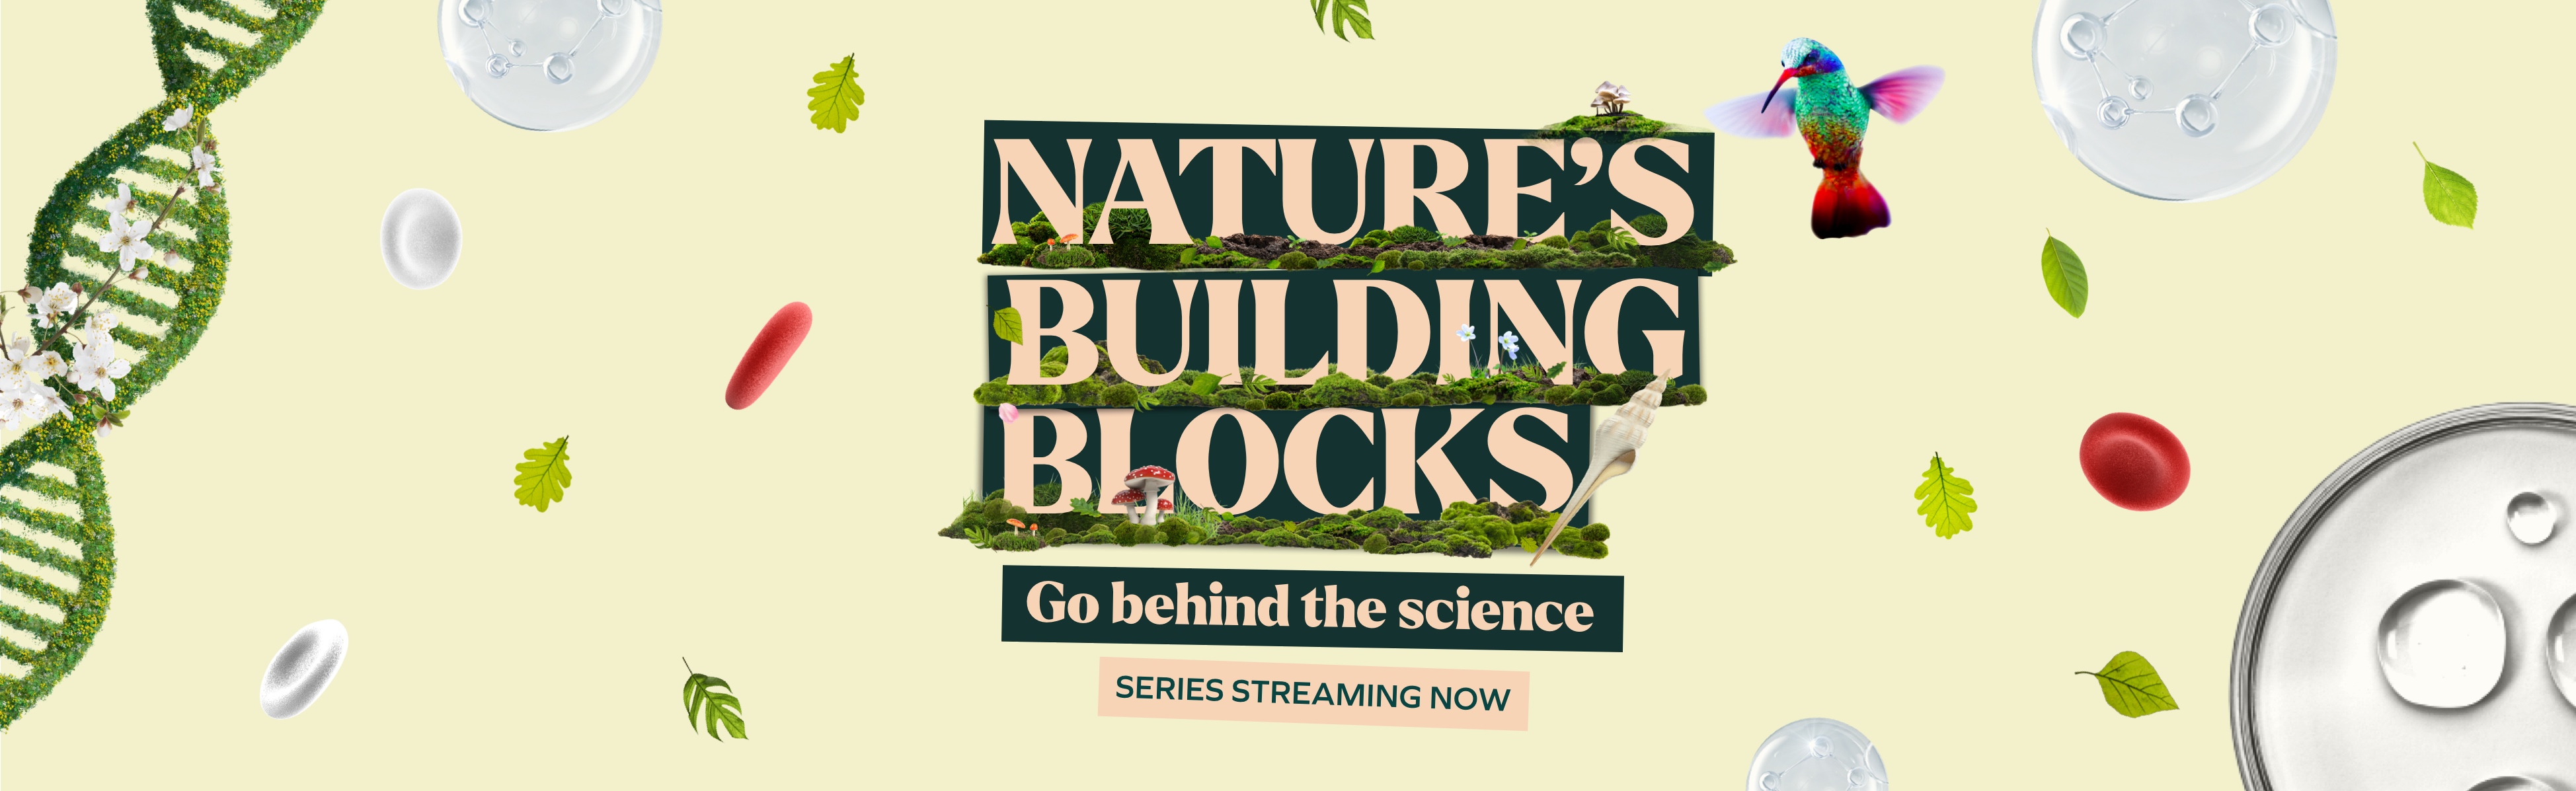 Watch Nature's Building Blocks now!